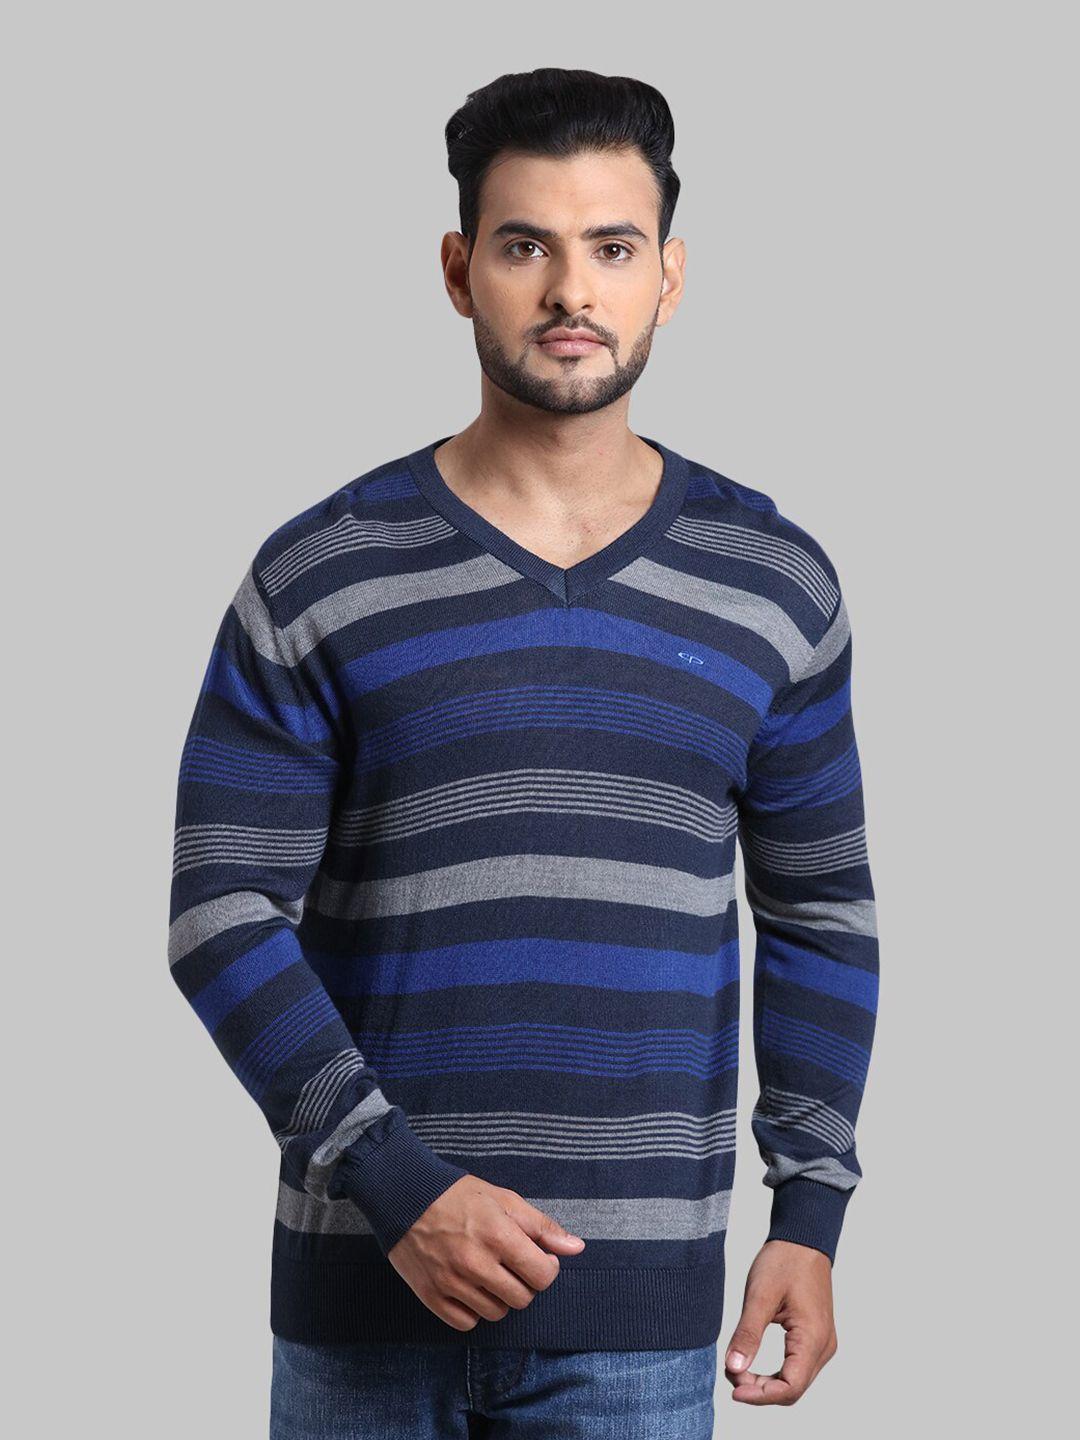 colorplus-men-blue-&-grey-striped-pullover